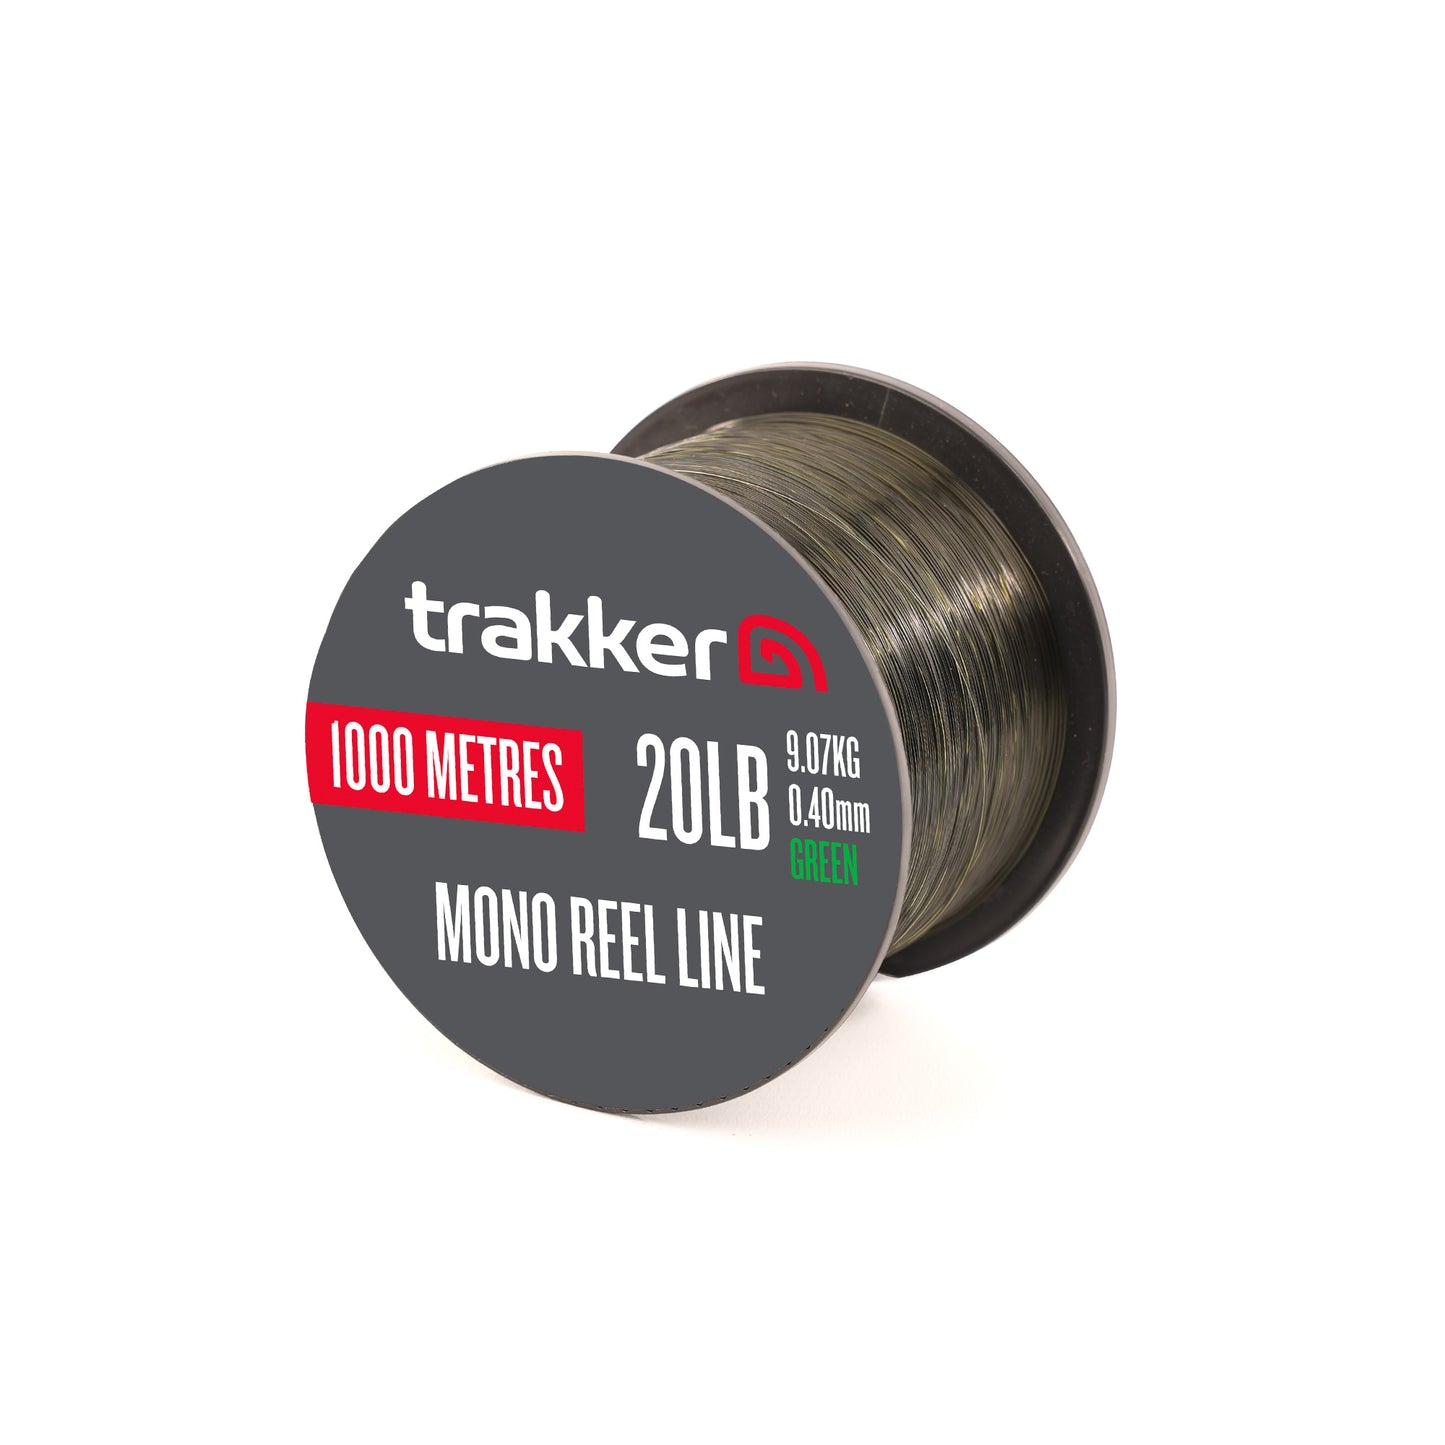 Trakker Mono Reel Line (20lb)(9.07kg)(0.40mm)(1000m)